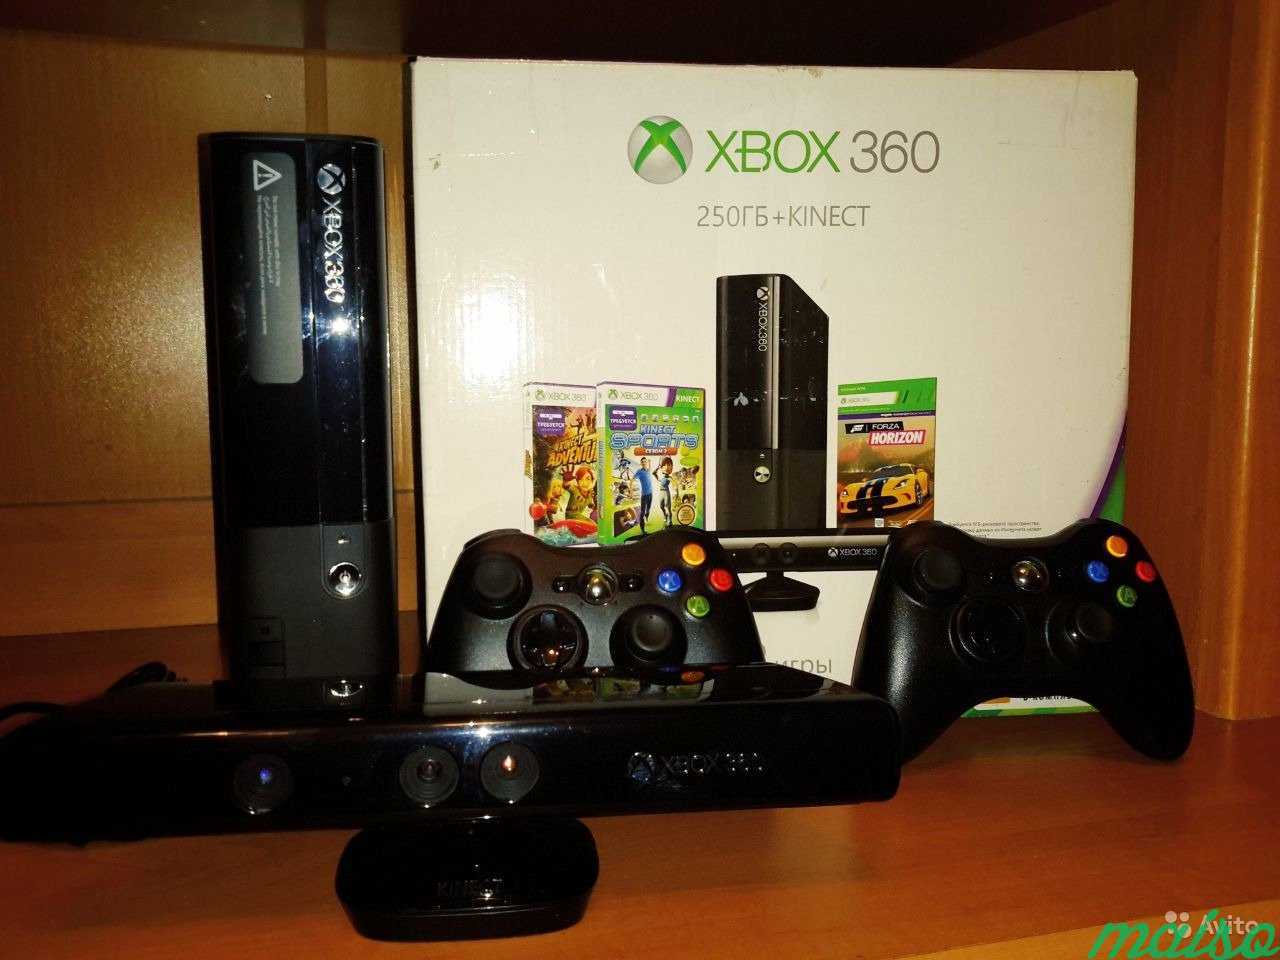 360 e игры. Xbox 360 e Kinect. Игровая приставка Xbox 360 250 GB. Xbox 360 e 2 джойстика кинект. Xbox 360 e 250gb и кинект.